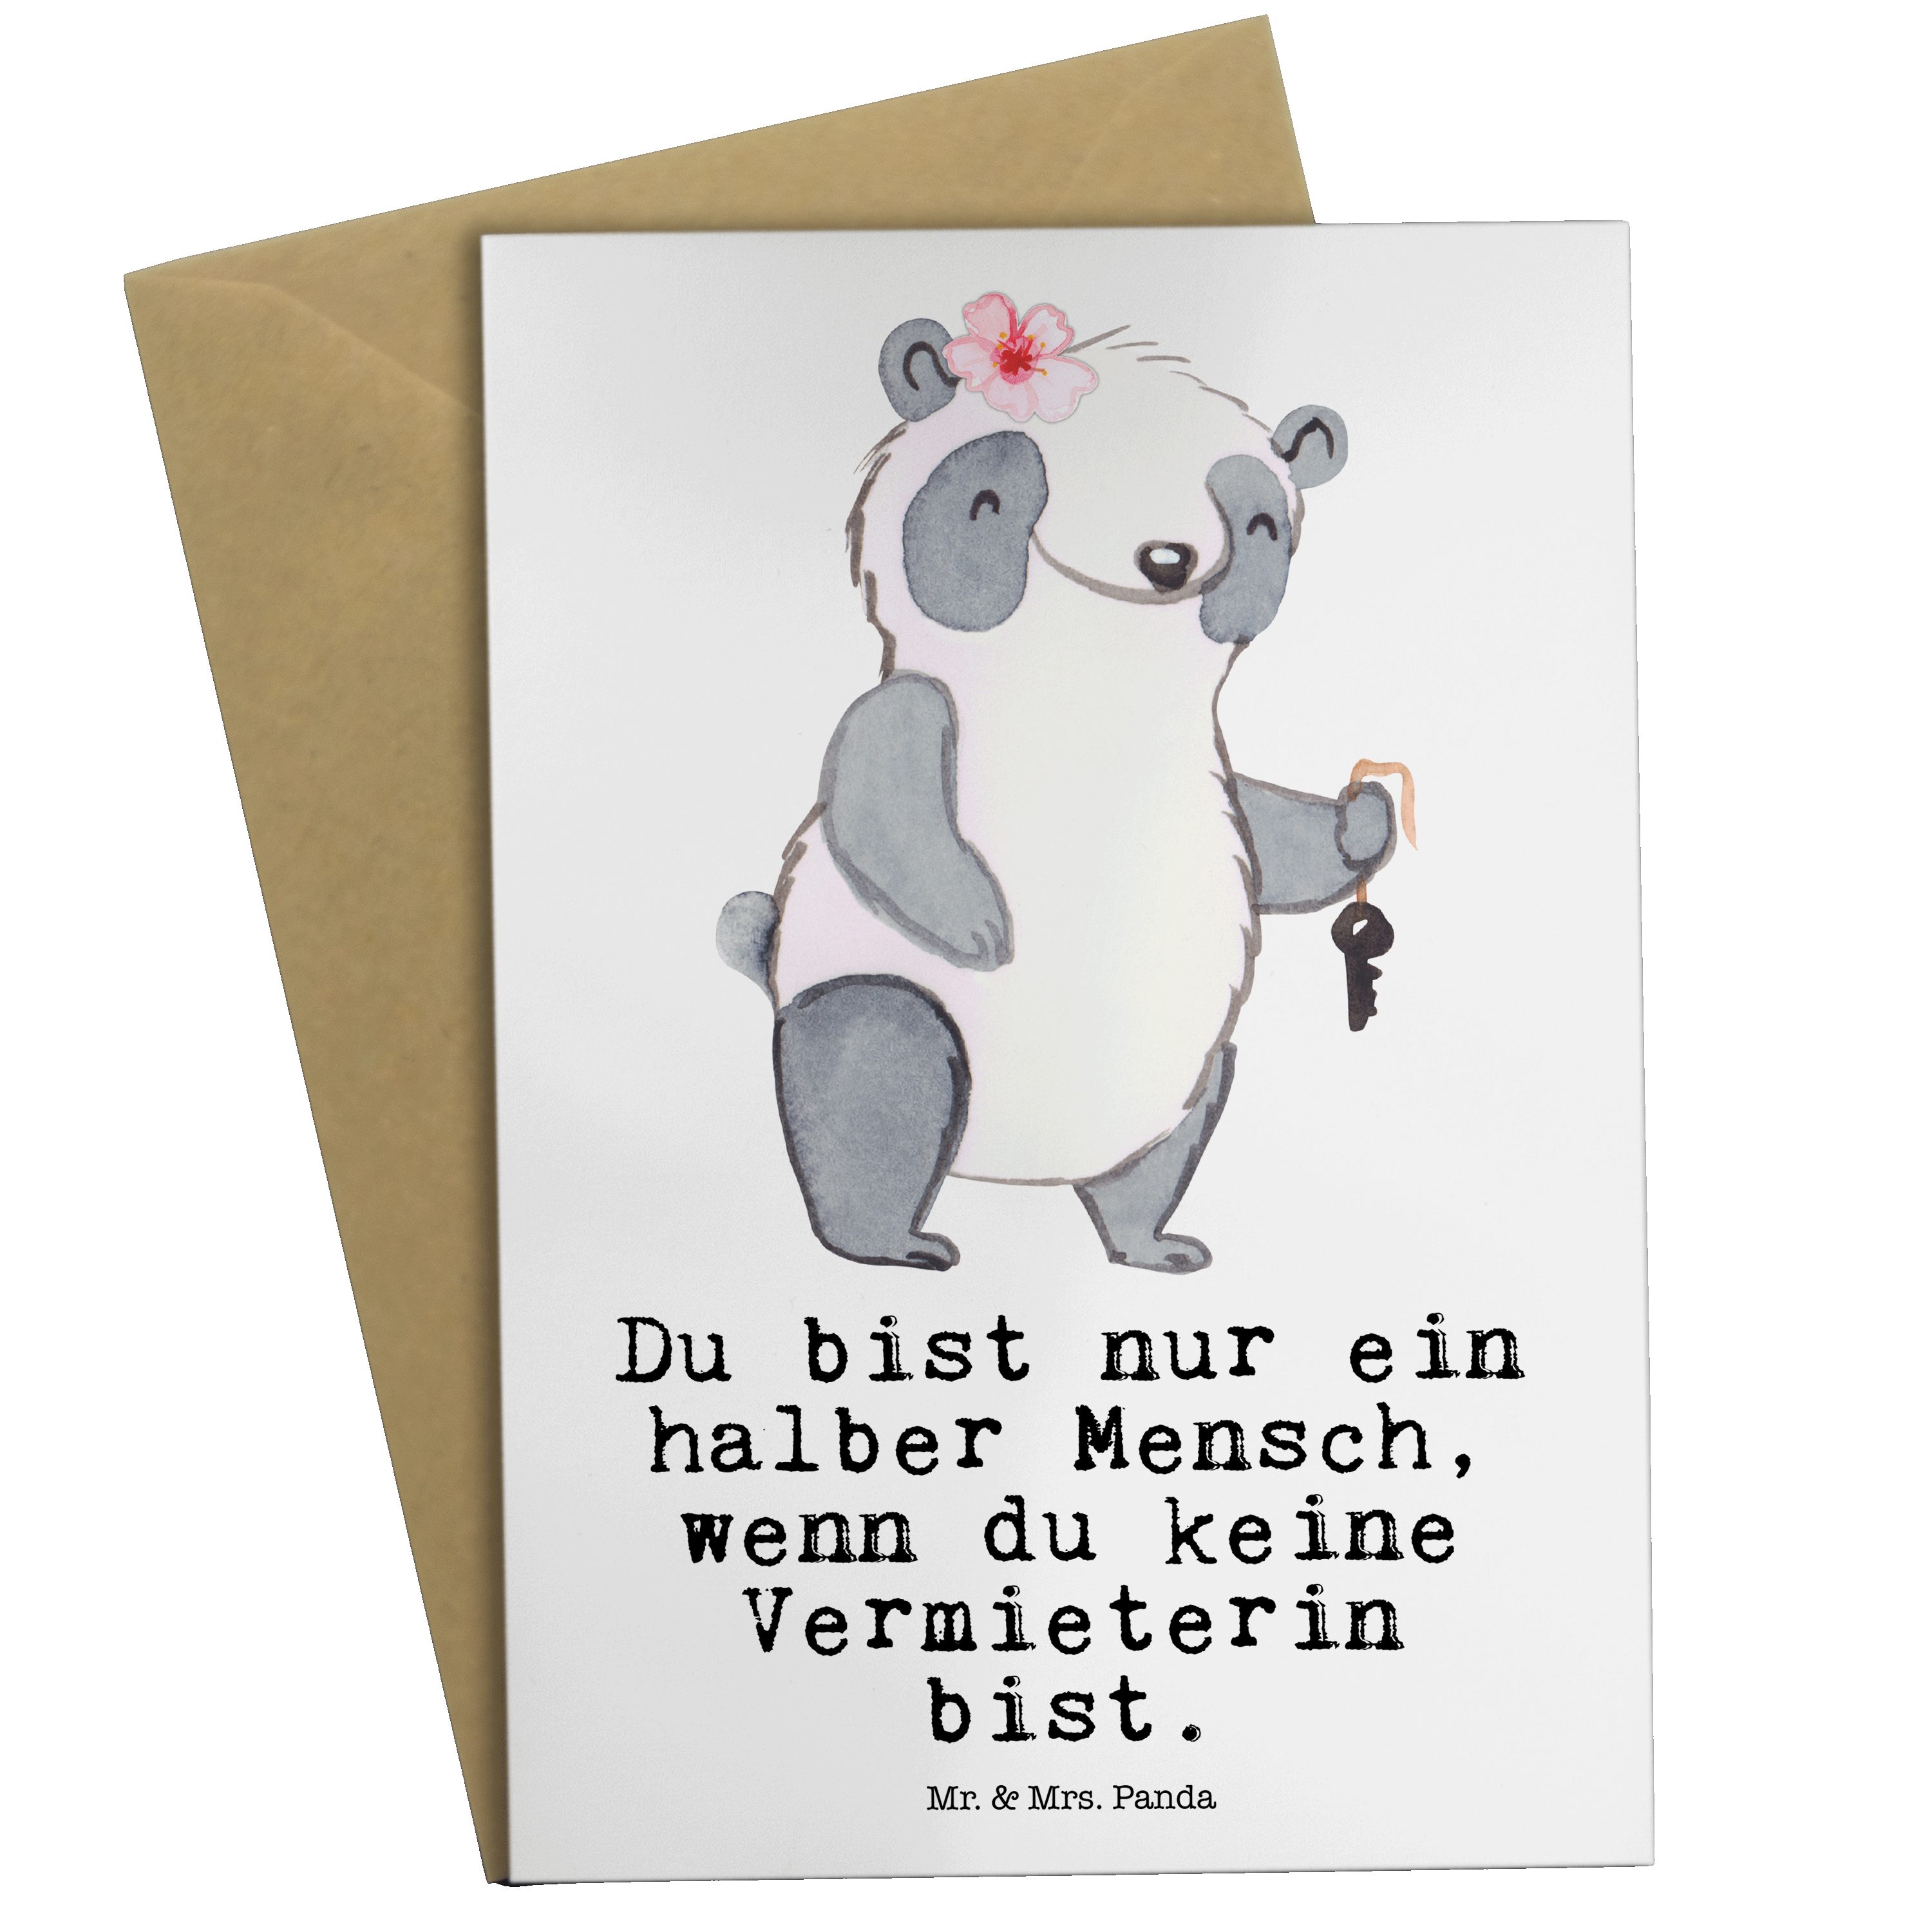 Mr. & Mrs. Panda Grußkarte Vermieterin mit Herz - Weiß - Geschenk, Danke, Geburtstagskarte, Klap